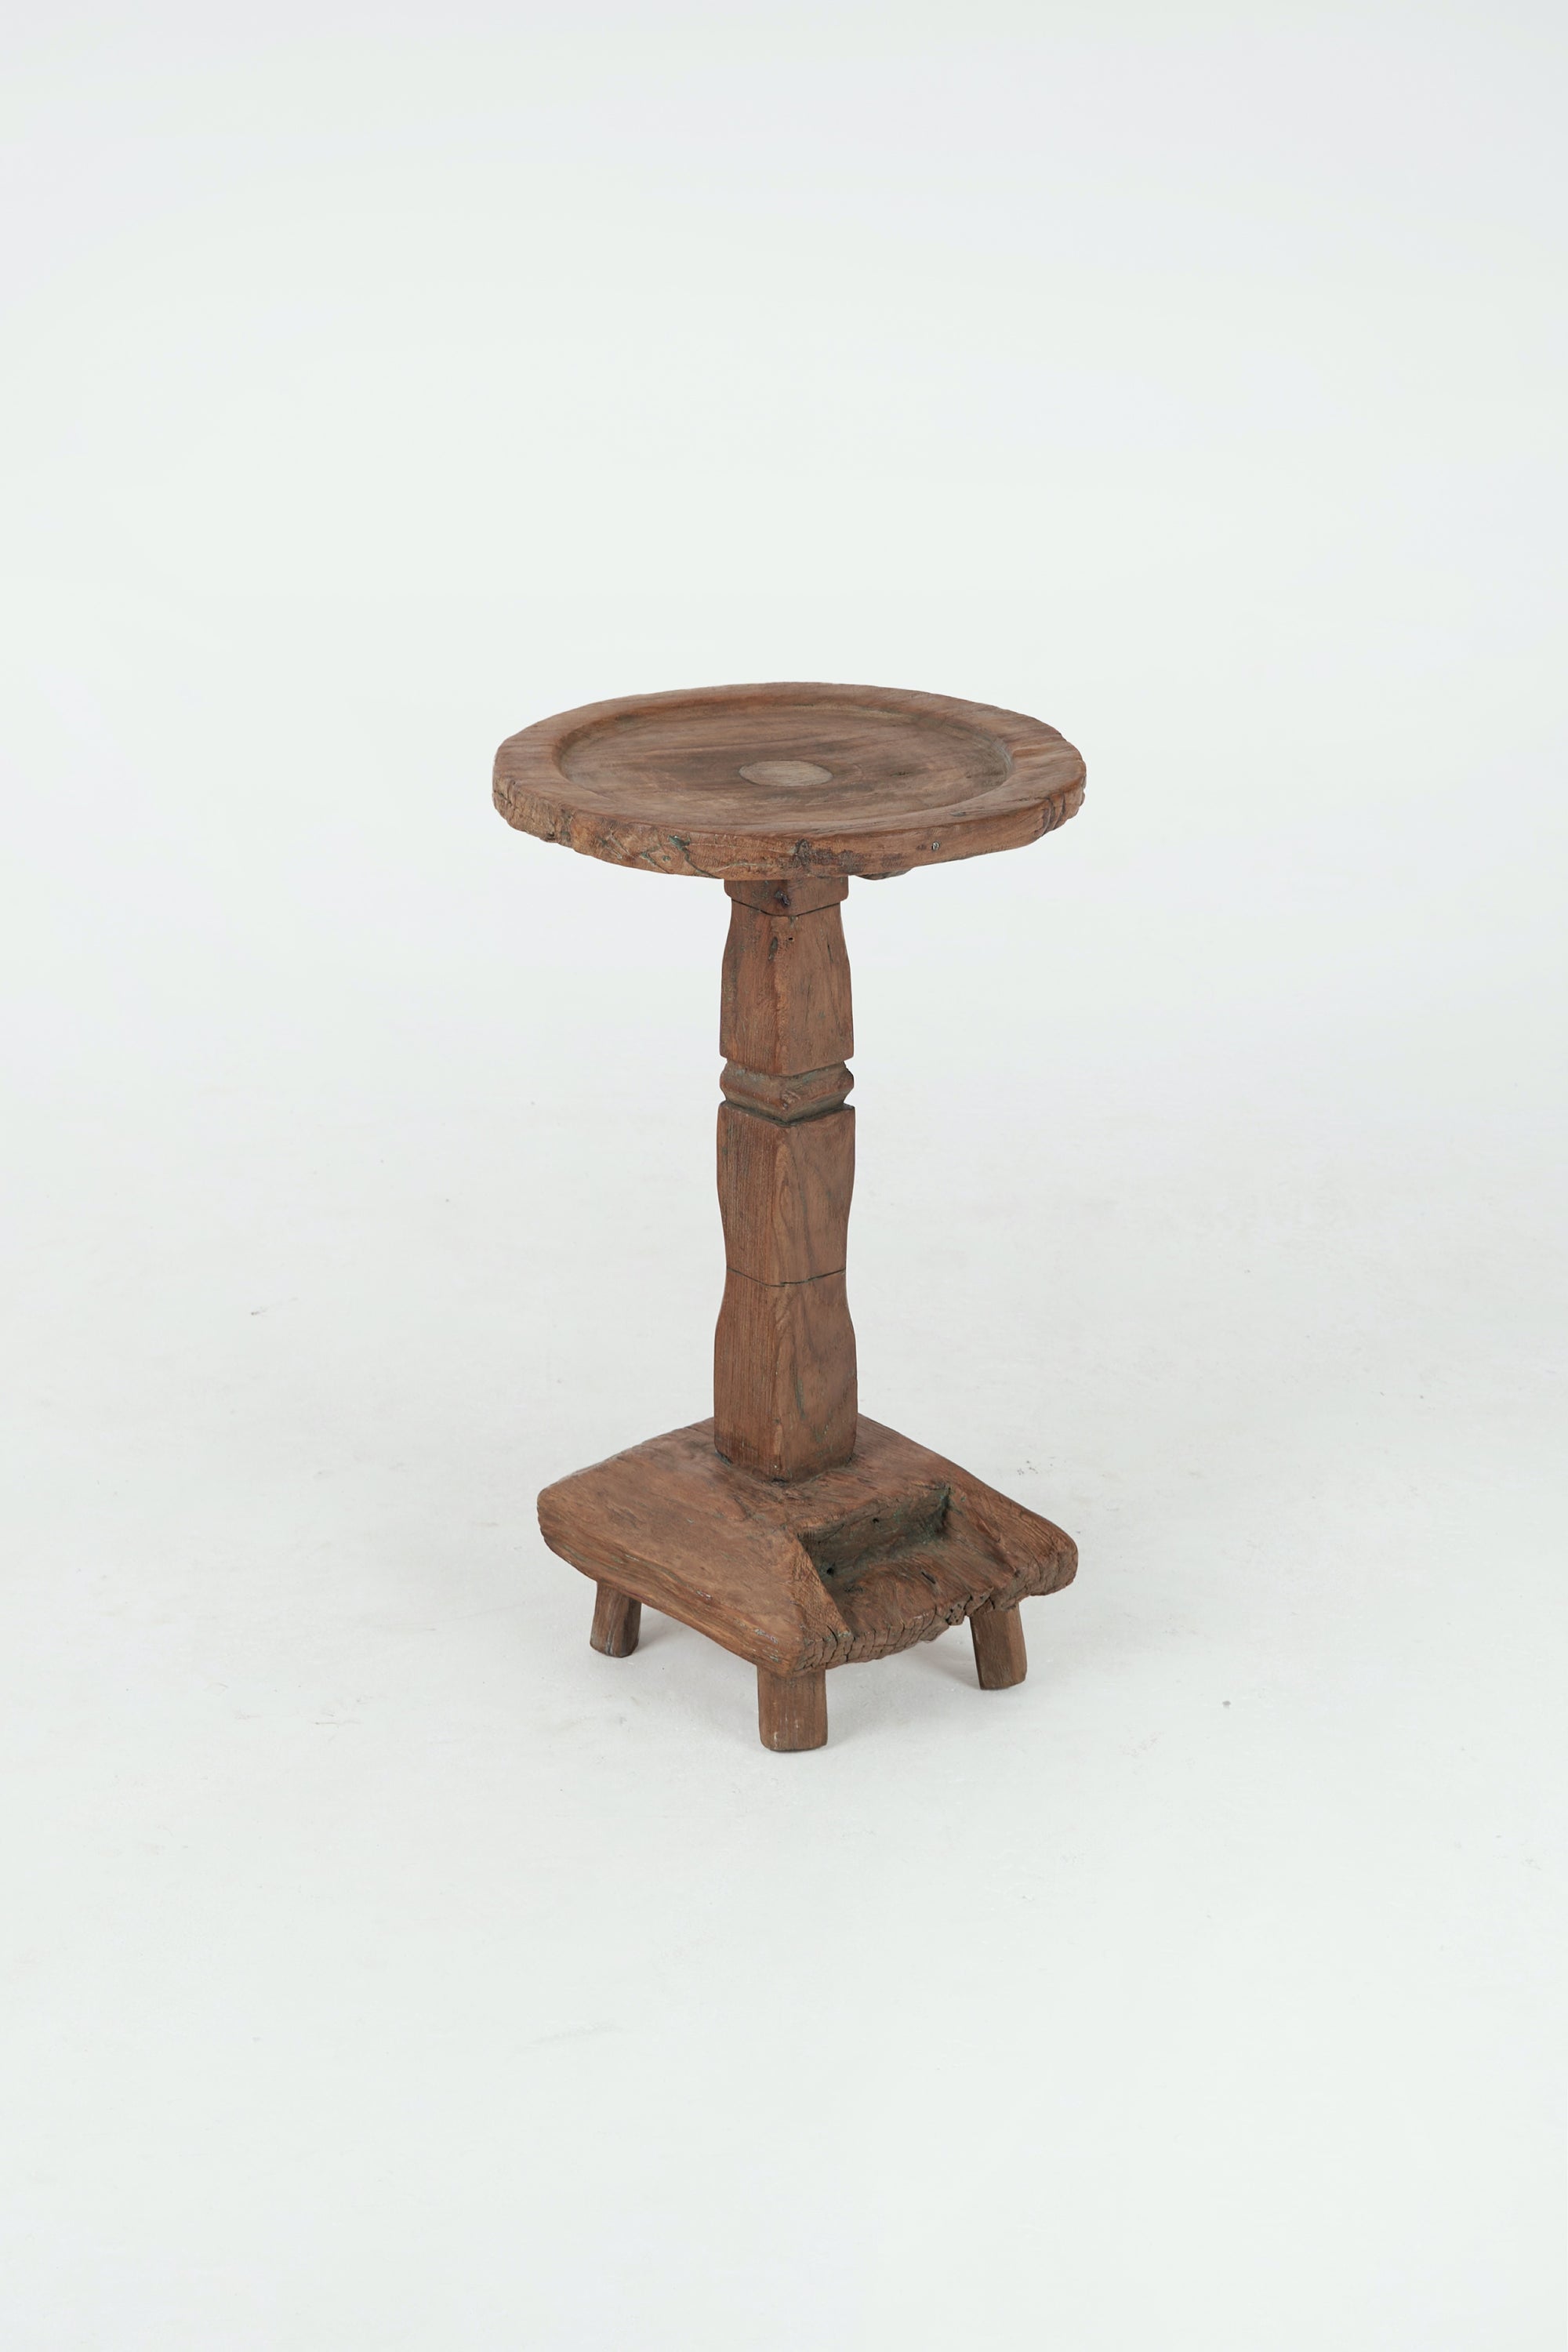 The Primitive Pedestal Side Table